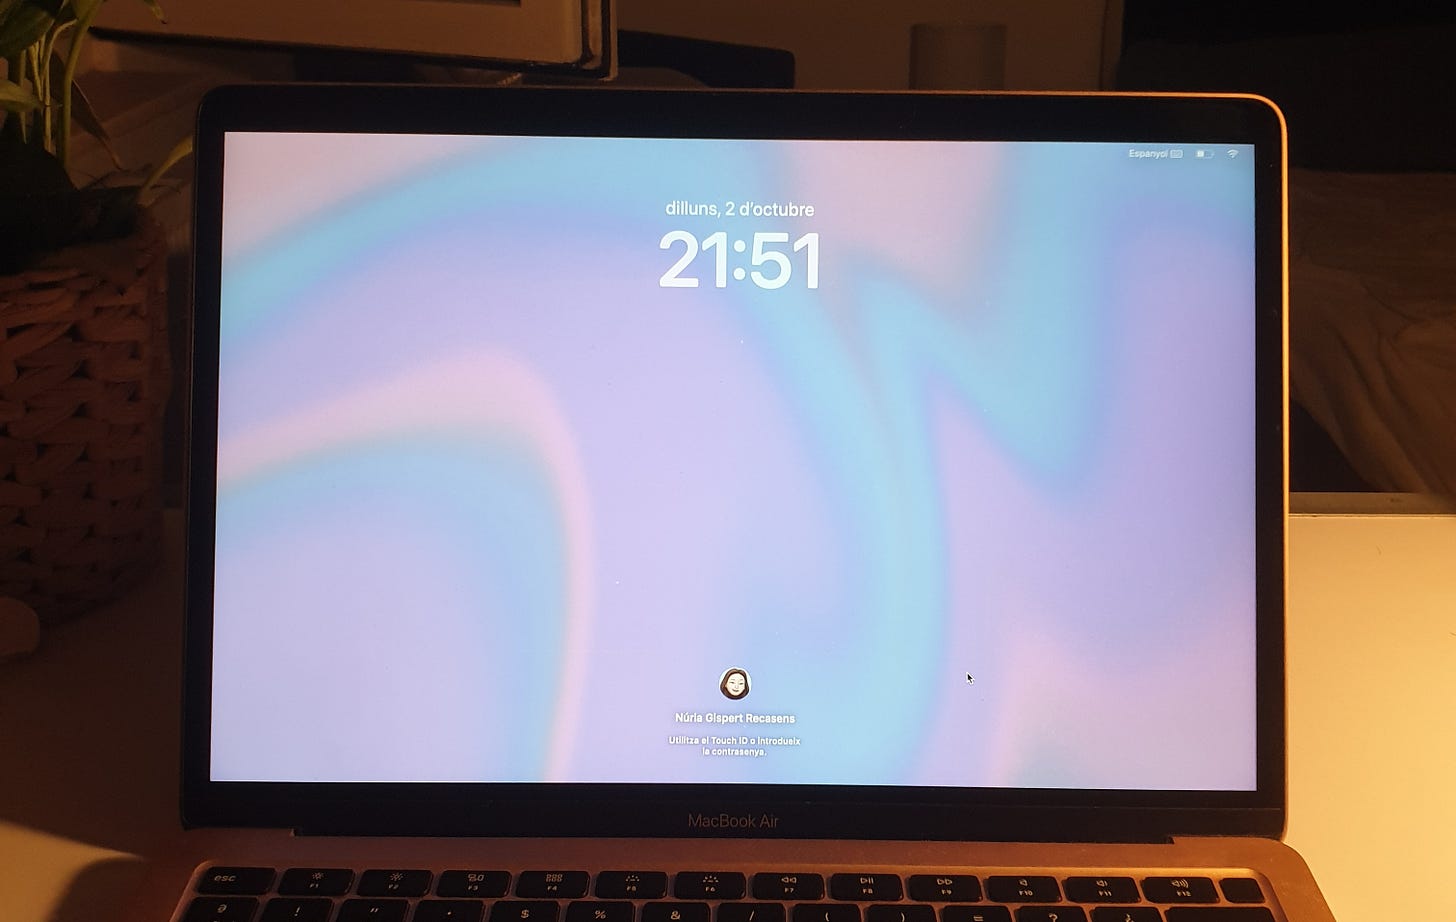 desktop wallpaper on a macbook screen